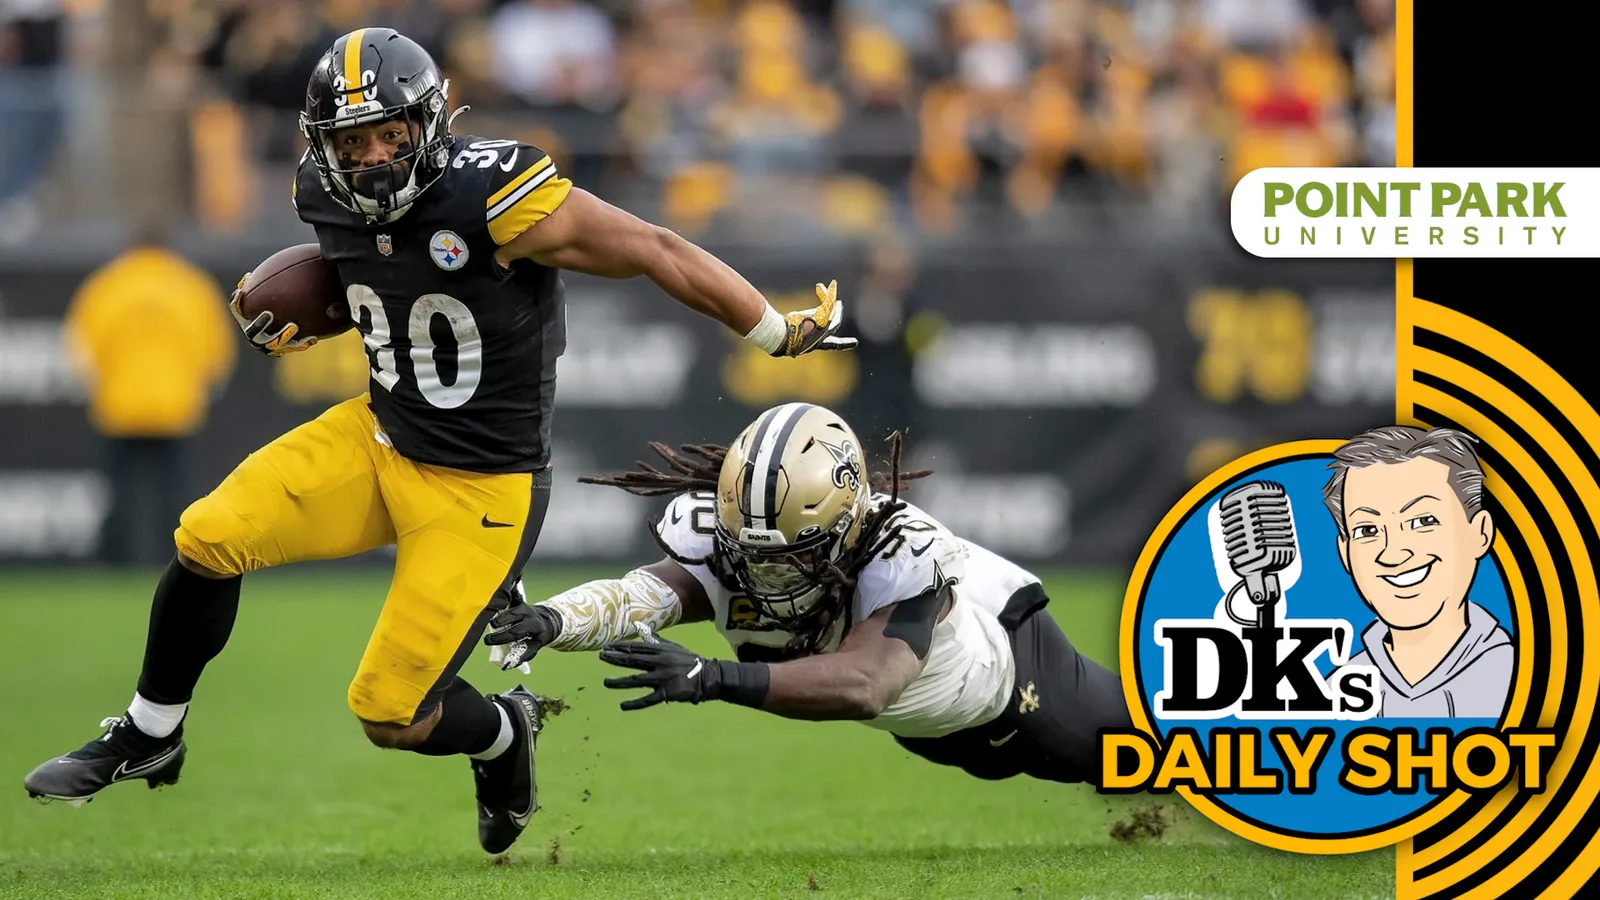 DKu2019s Daily Shot of Steelers: Run until you canu2019t